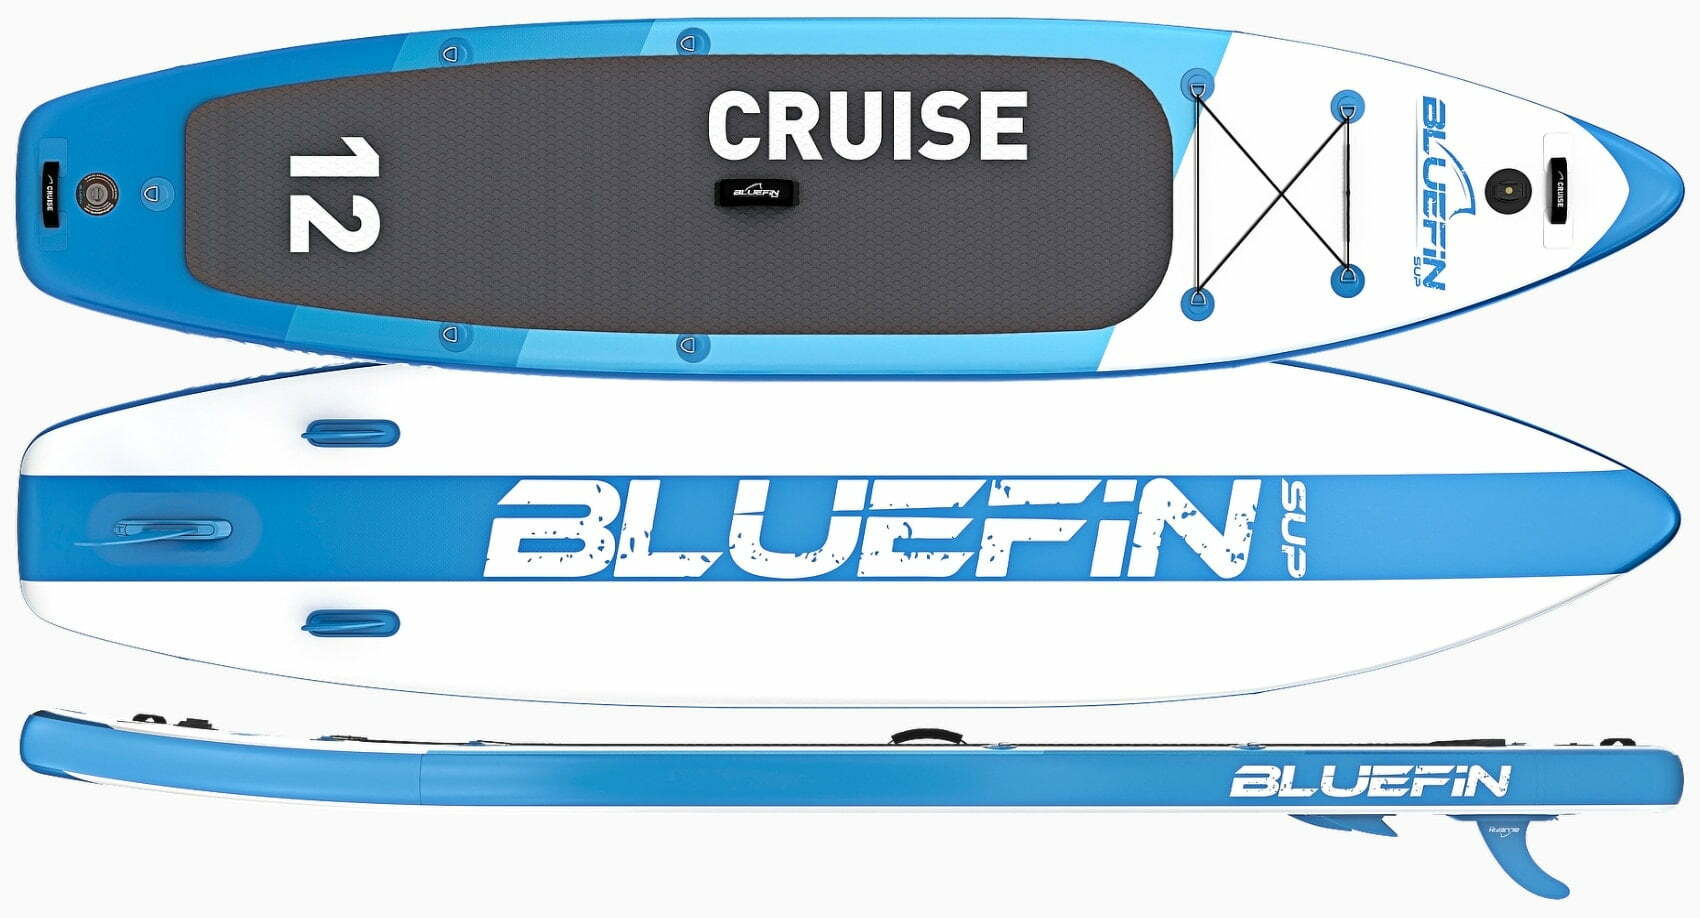 Bluefin SUP Cruise 12' Touring Model